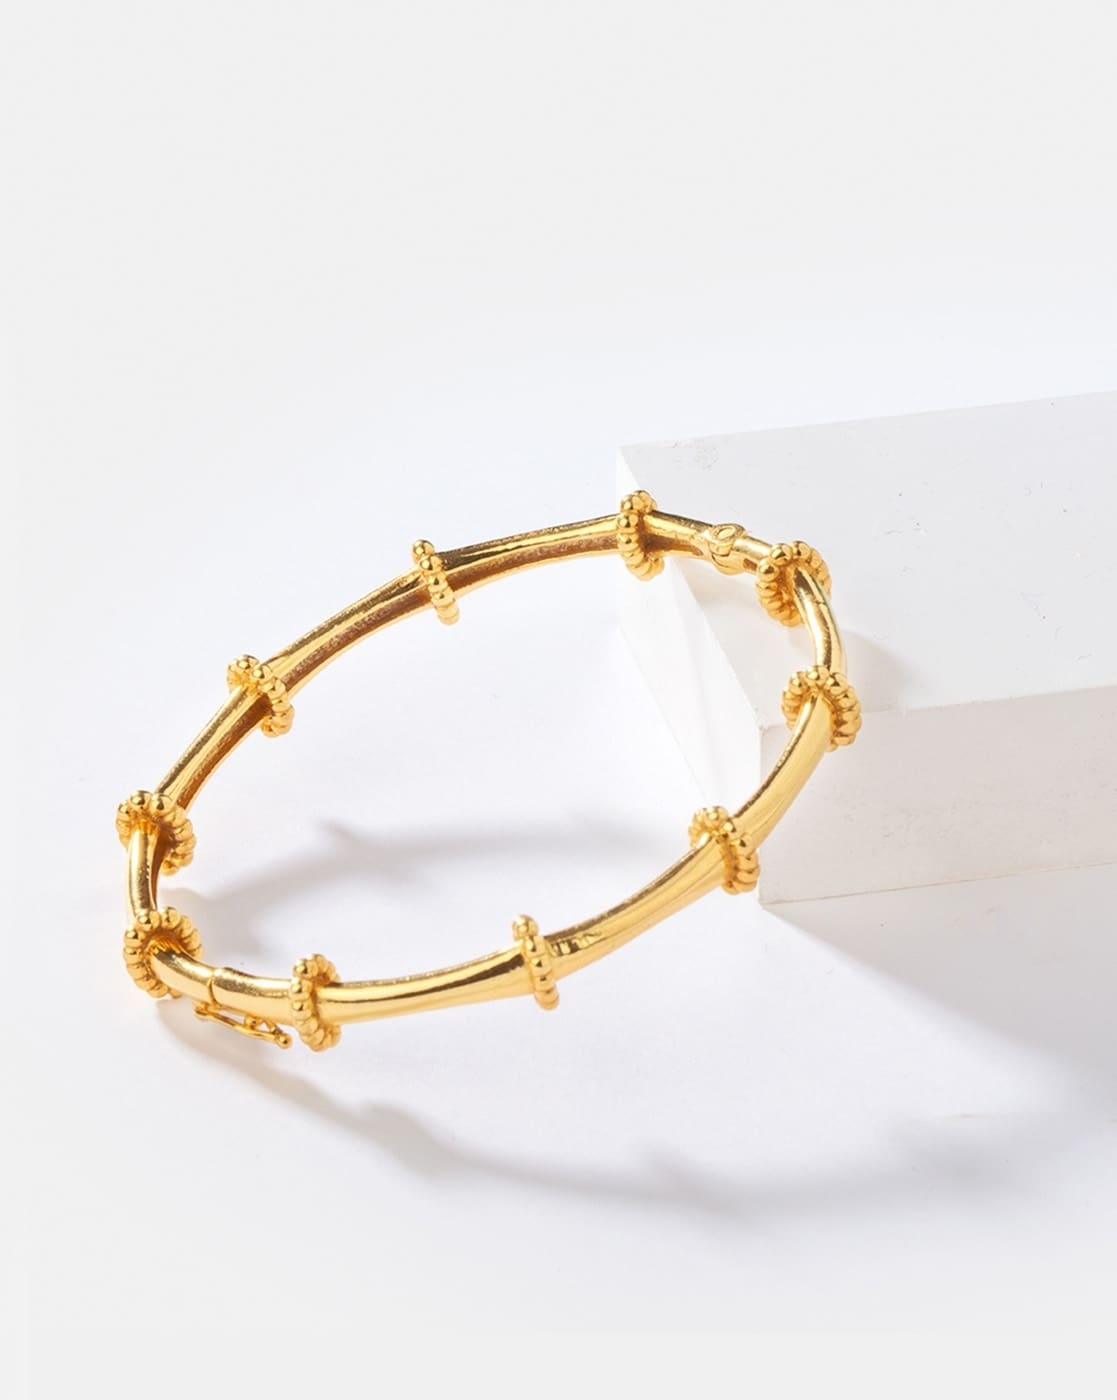 24K 9999 Pure Gold 3D Goldfish Link Chain Vintage Bracelet 7'' - Etsy